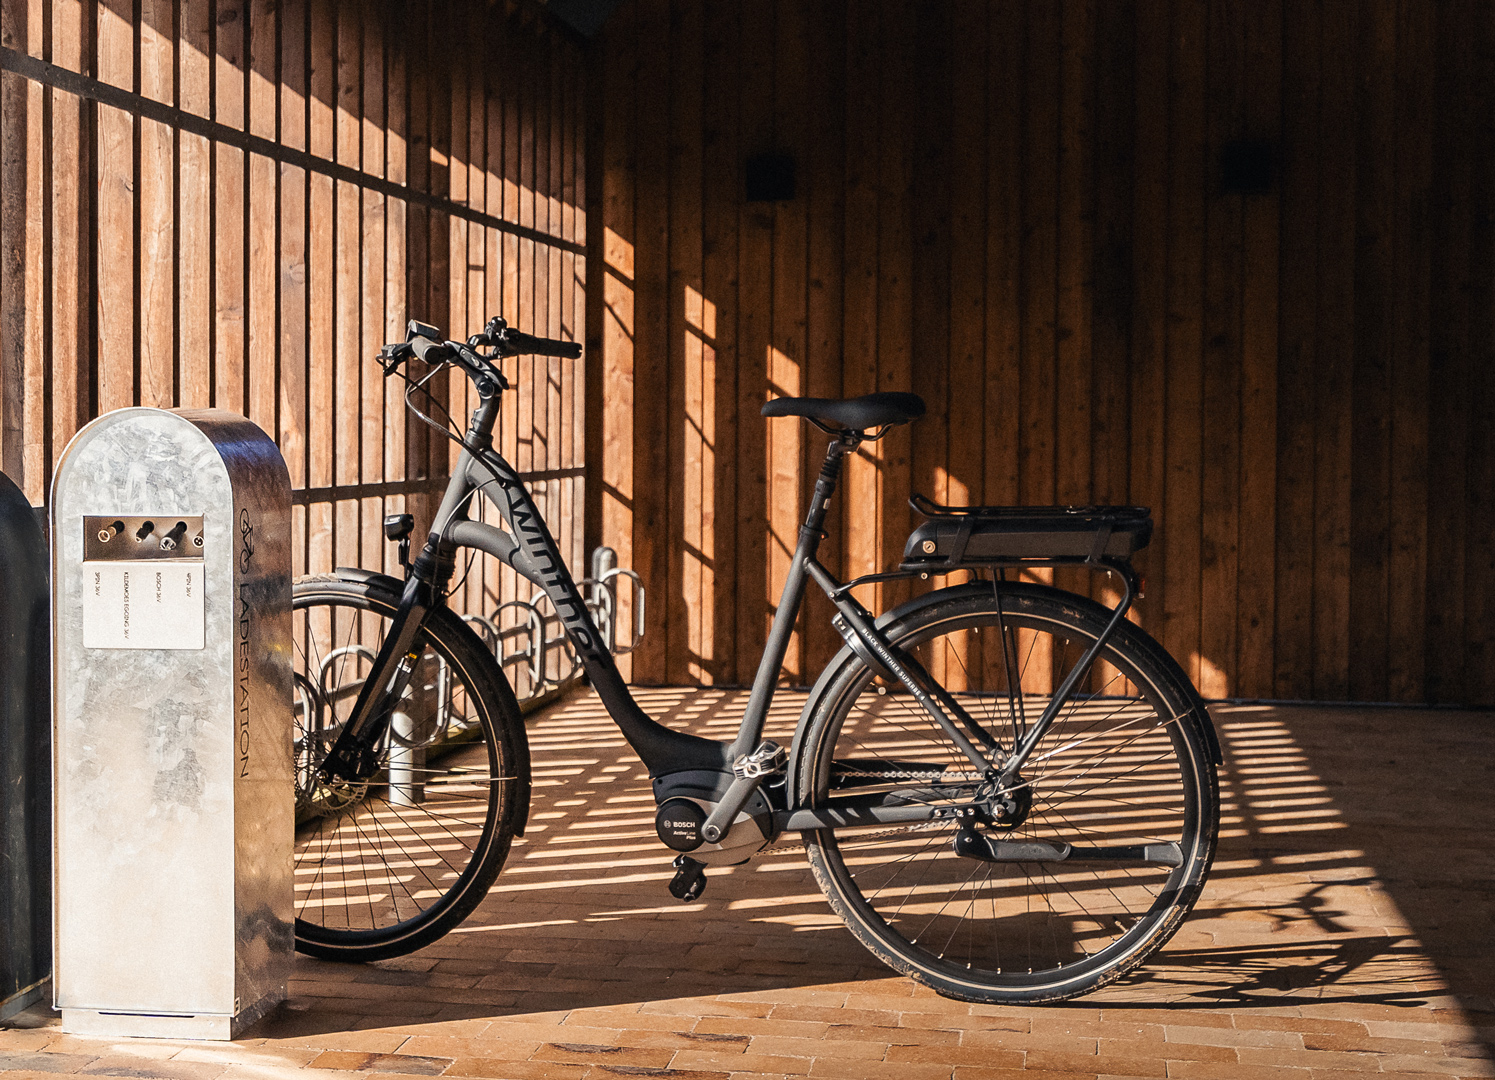 Bike racks and electric bike charging station in combination